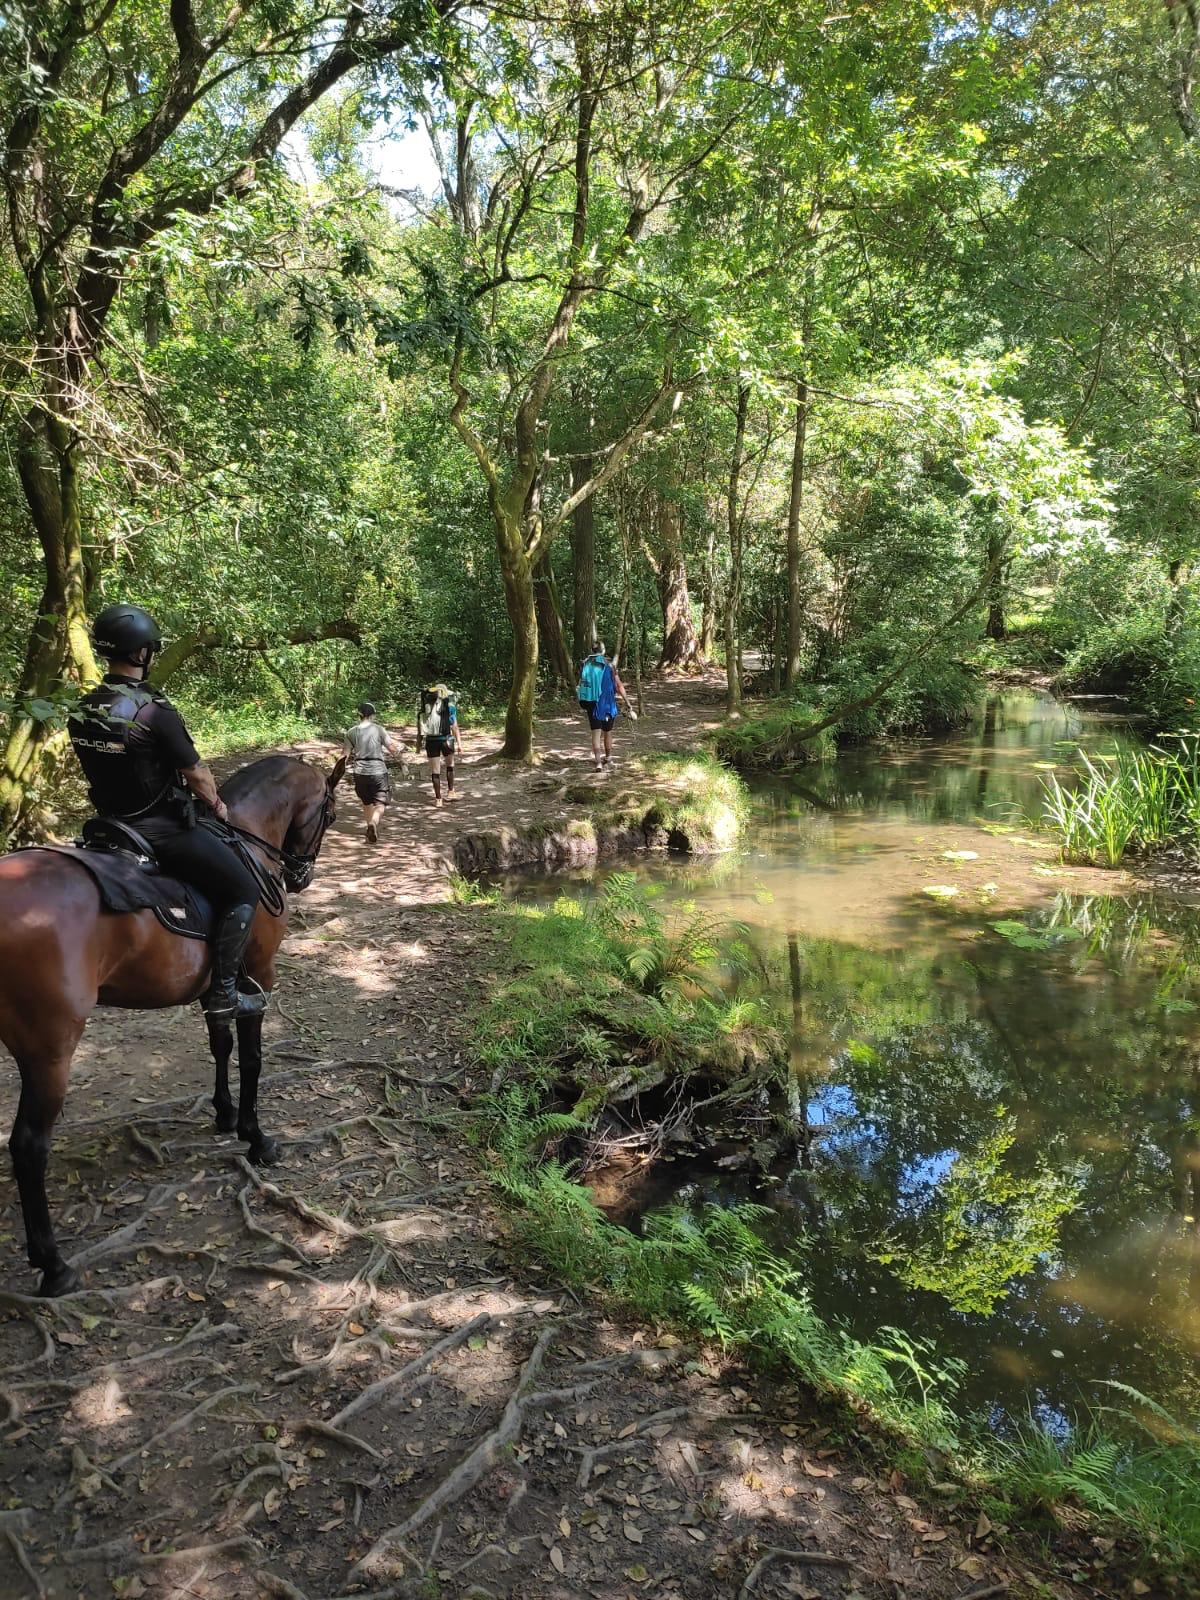 Un Policía montado a caballo en un camino con vegetación y un río detrás de tres peregrinos